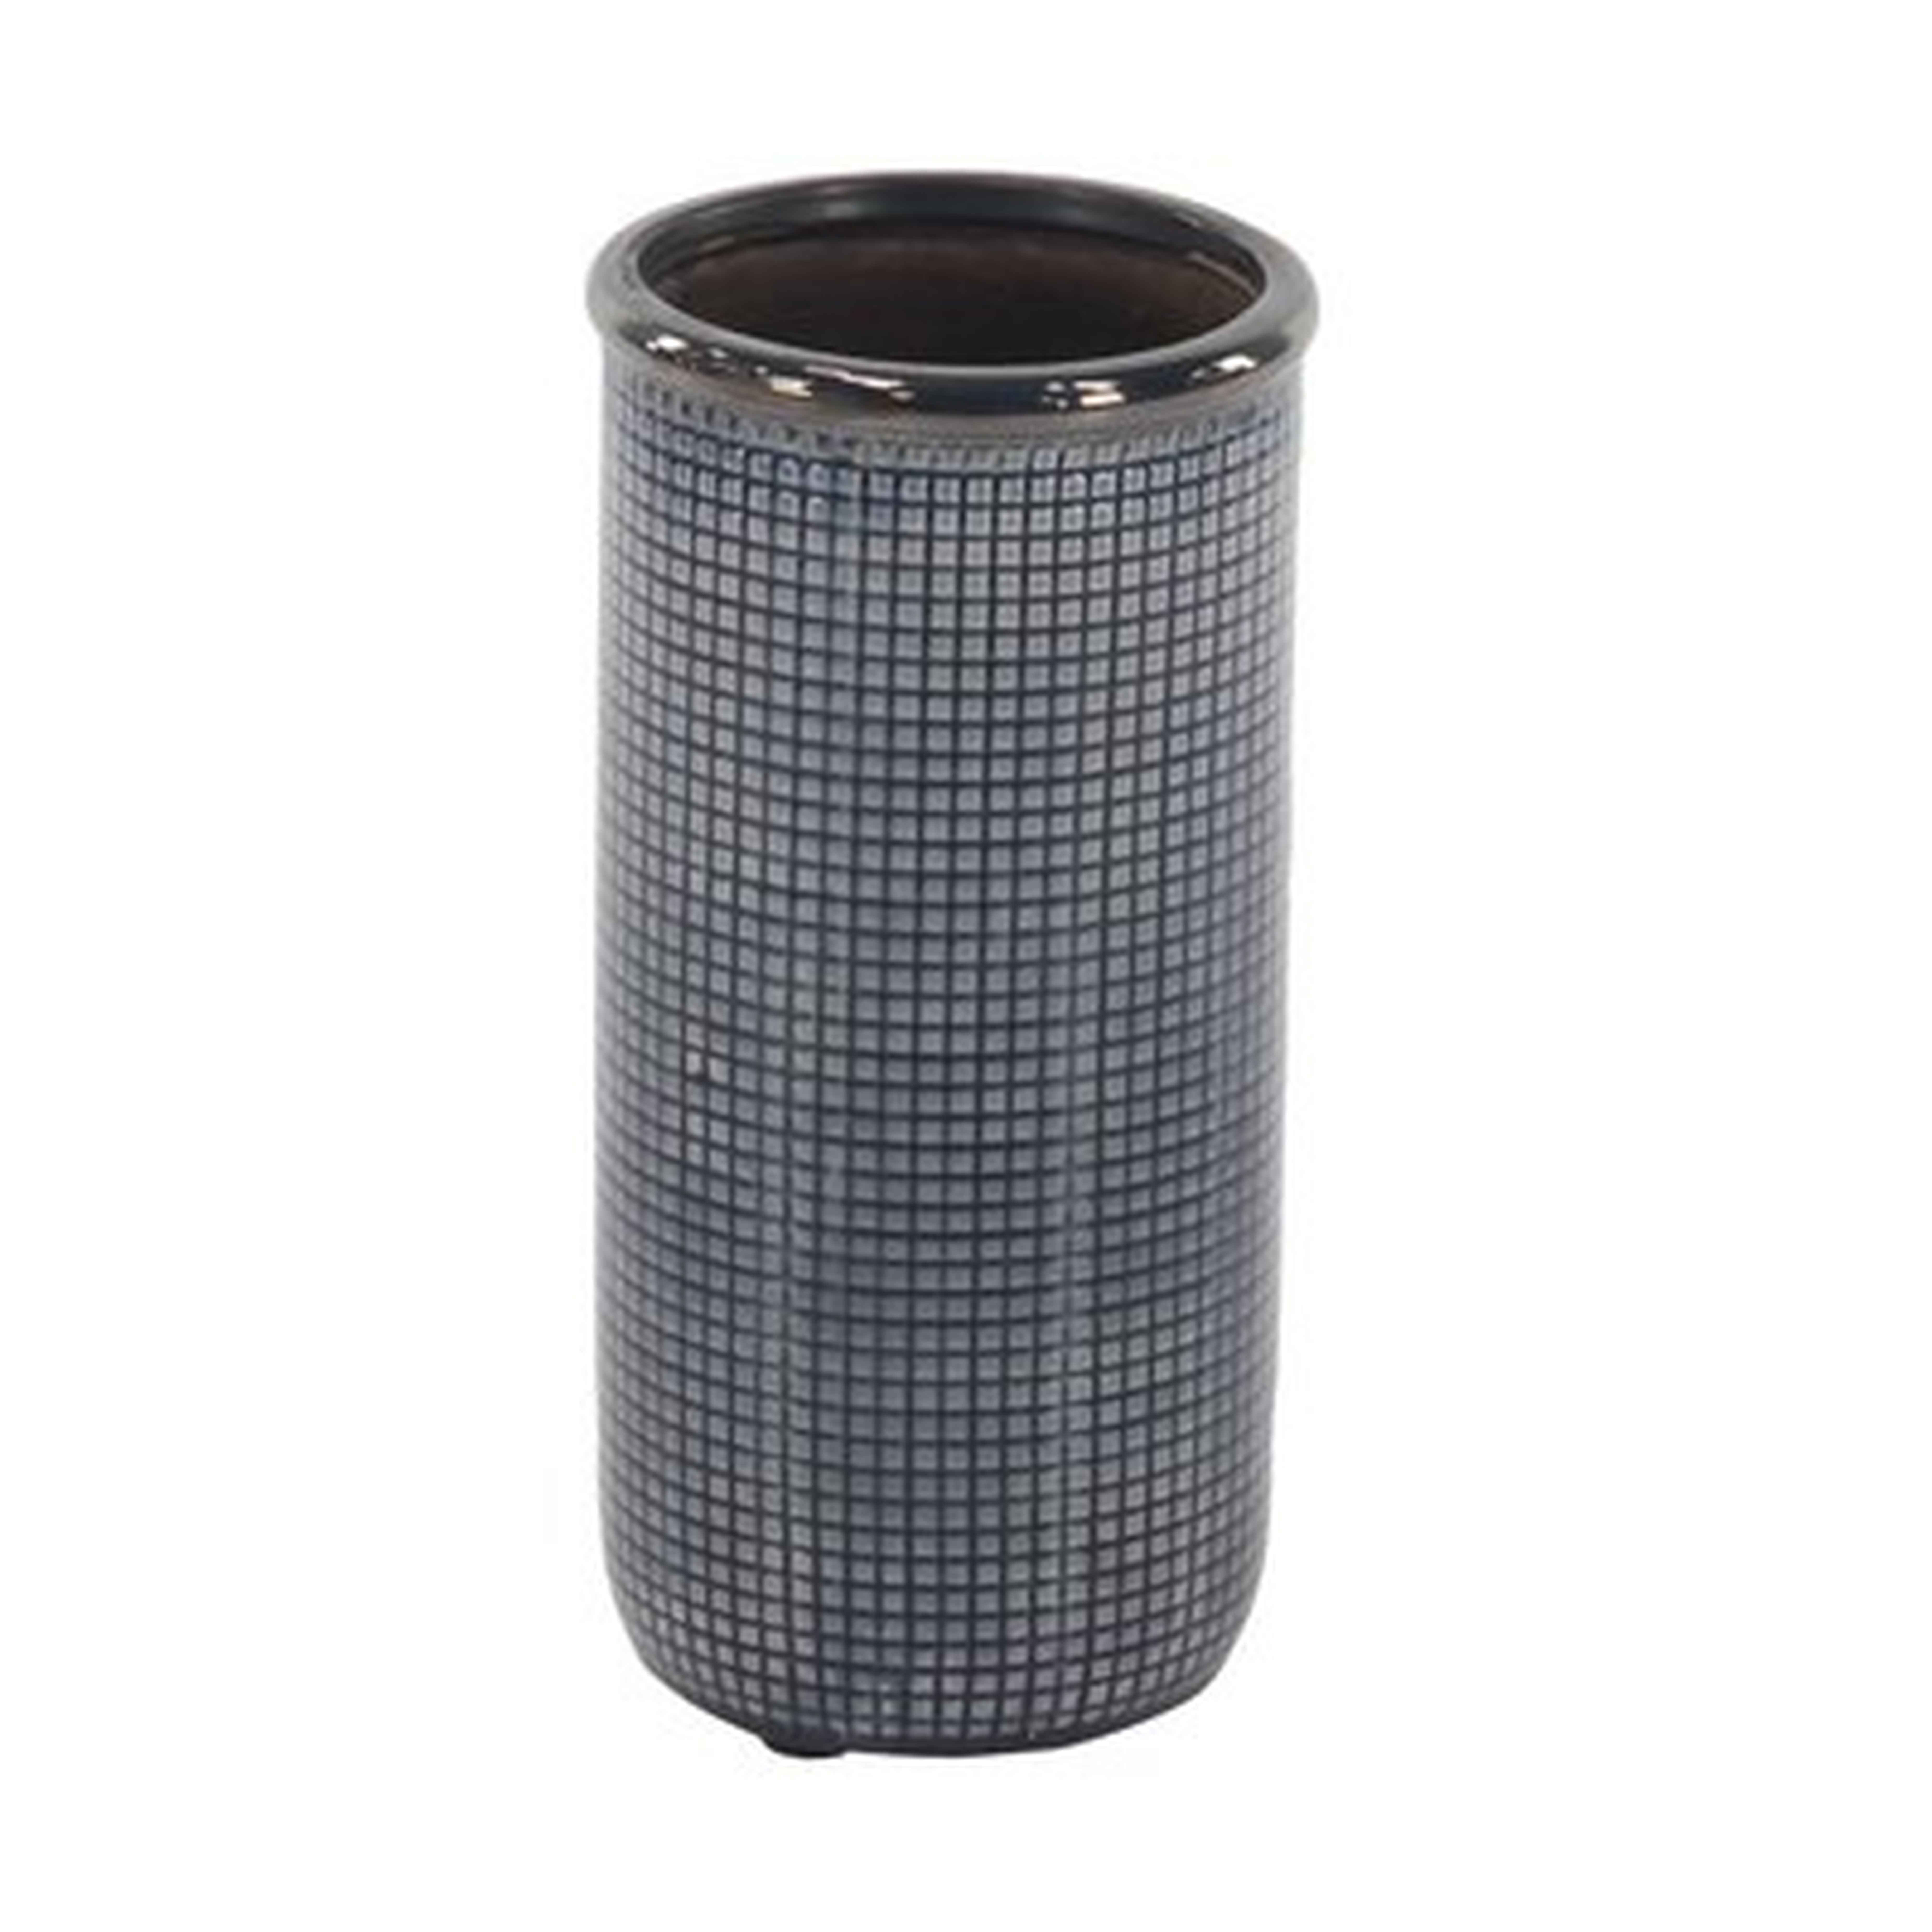 Aquino Contemporary Cylindrical Mesh Design Table Vase - Wayfair